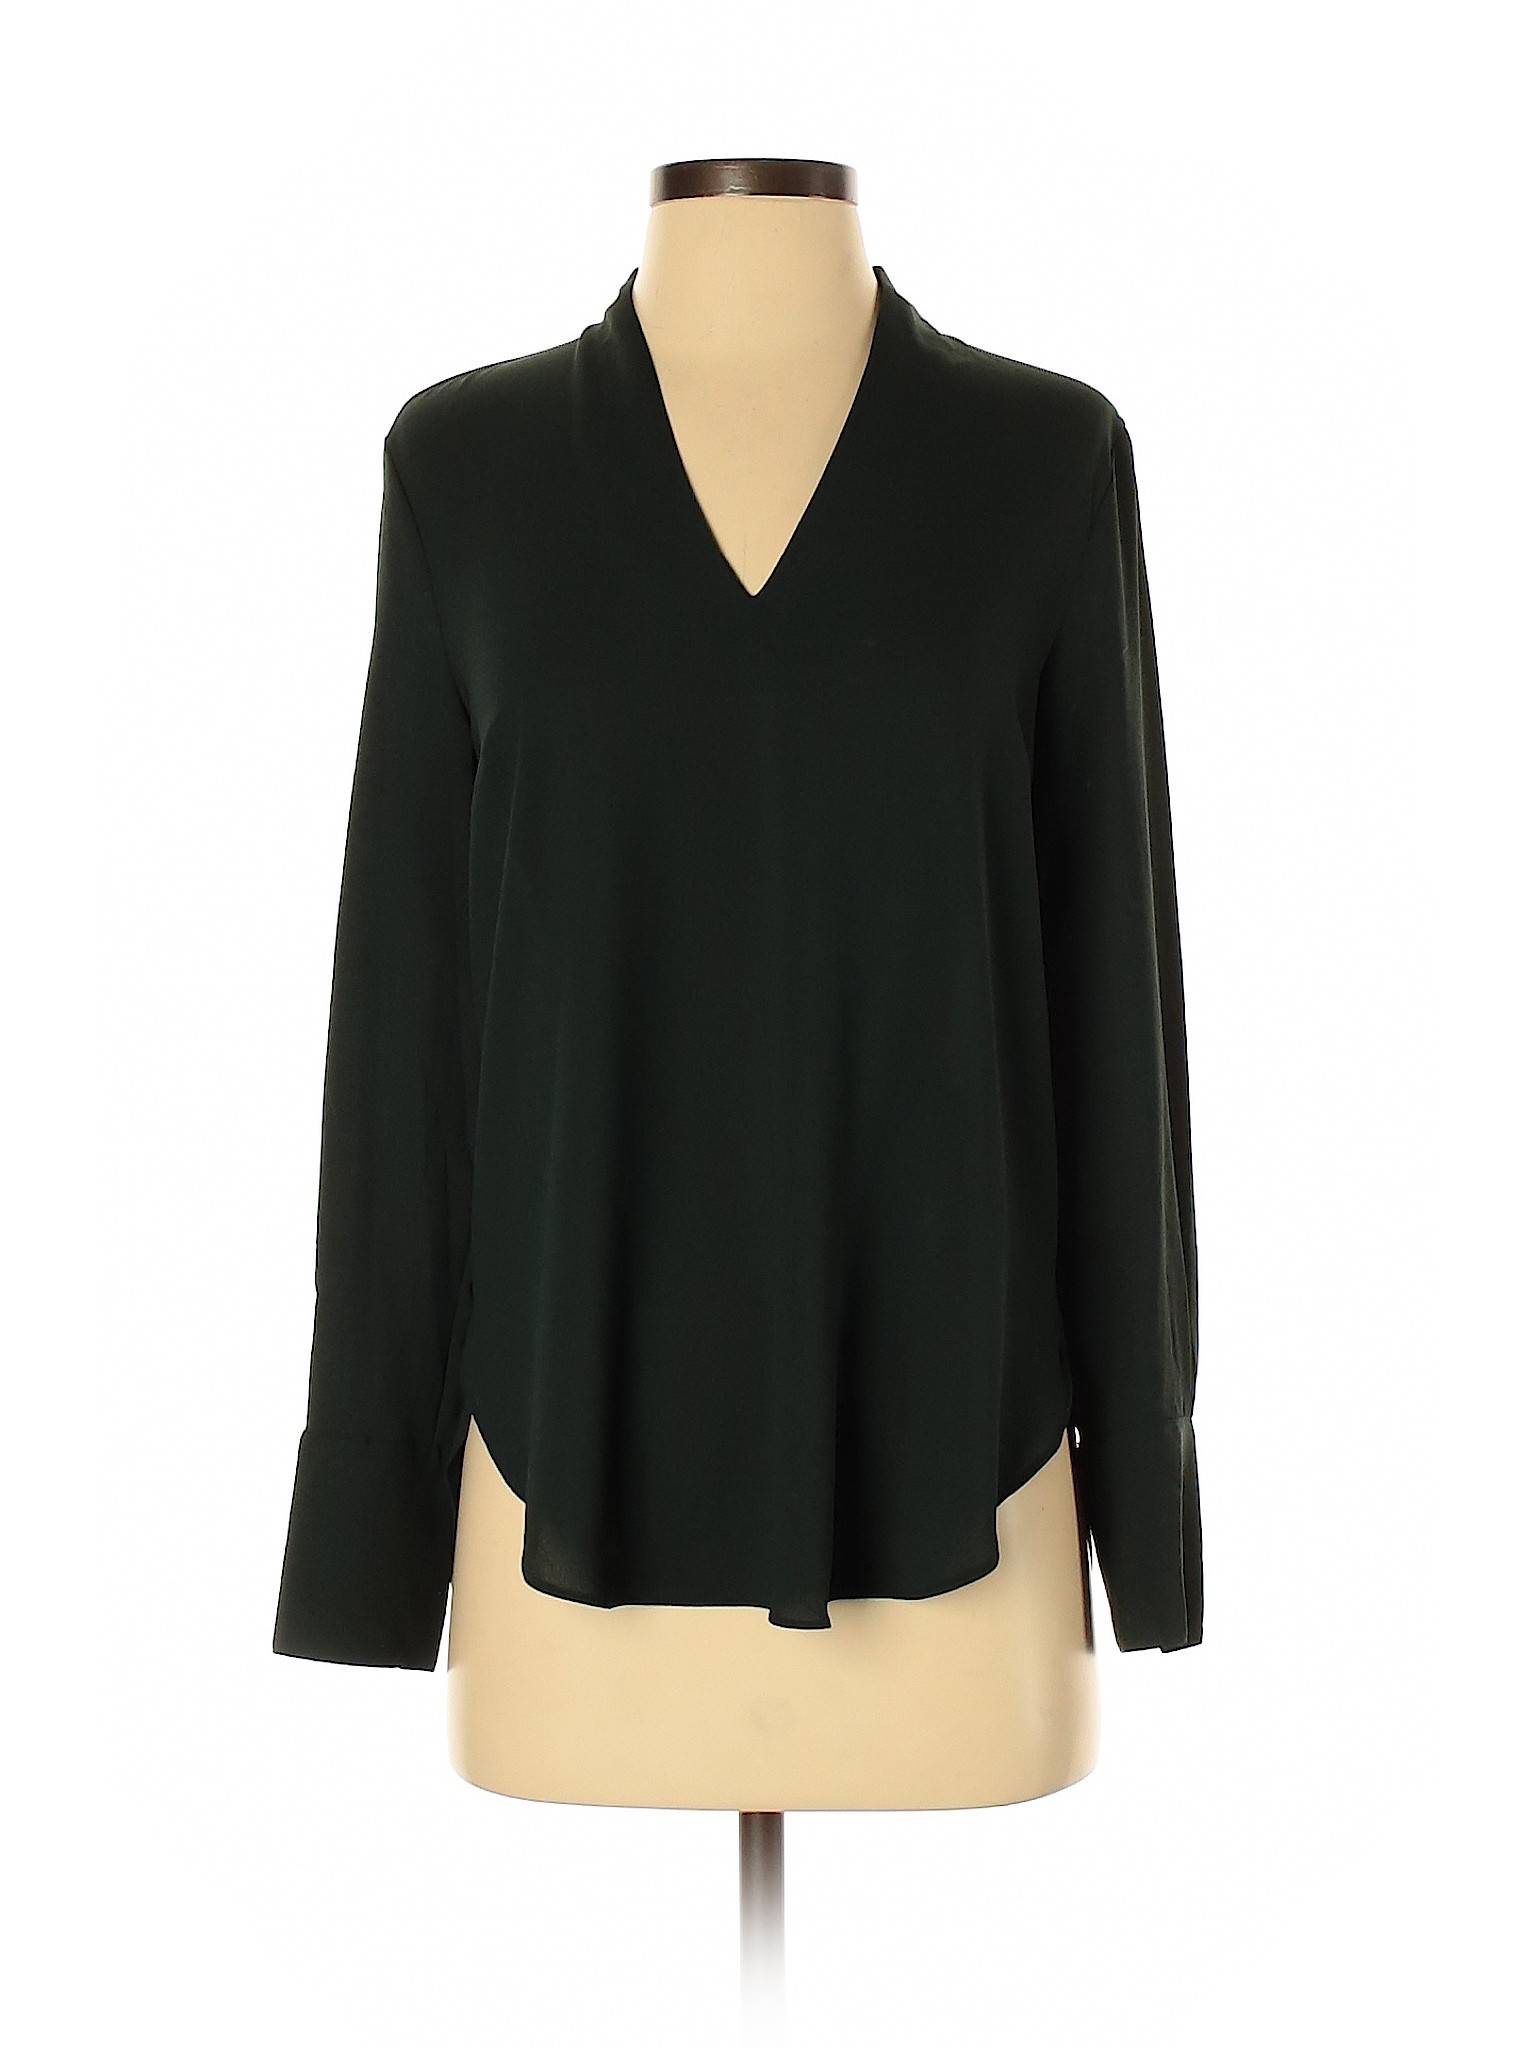 H&M Women Green Long Sleeve Blouse 4 | eBay